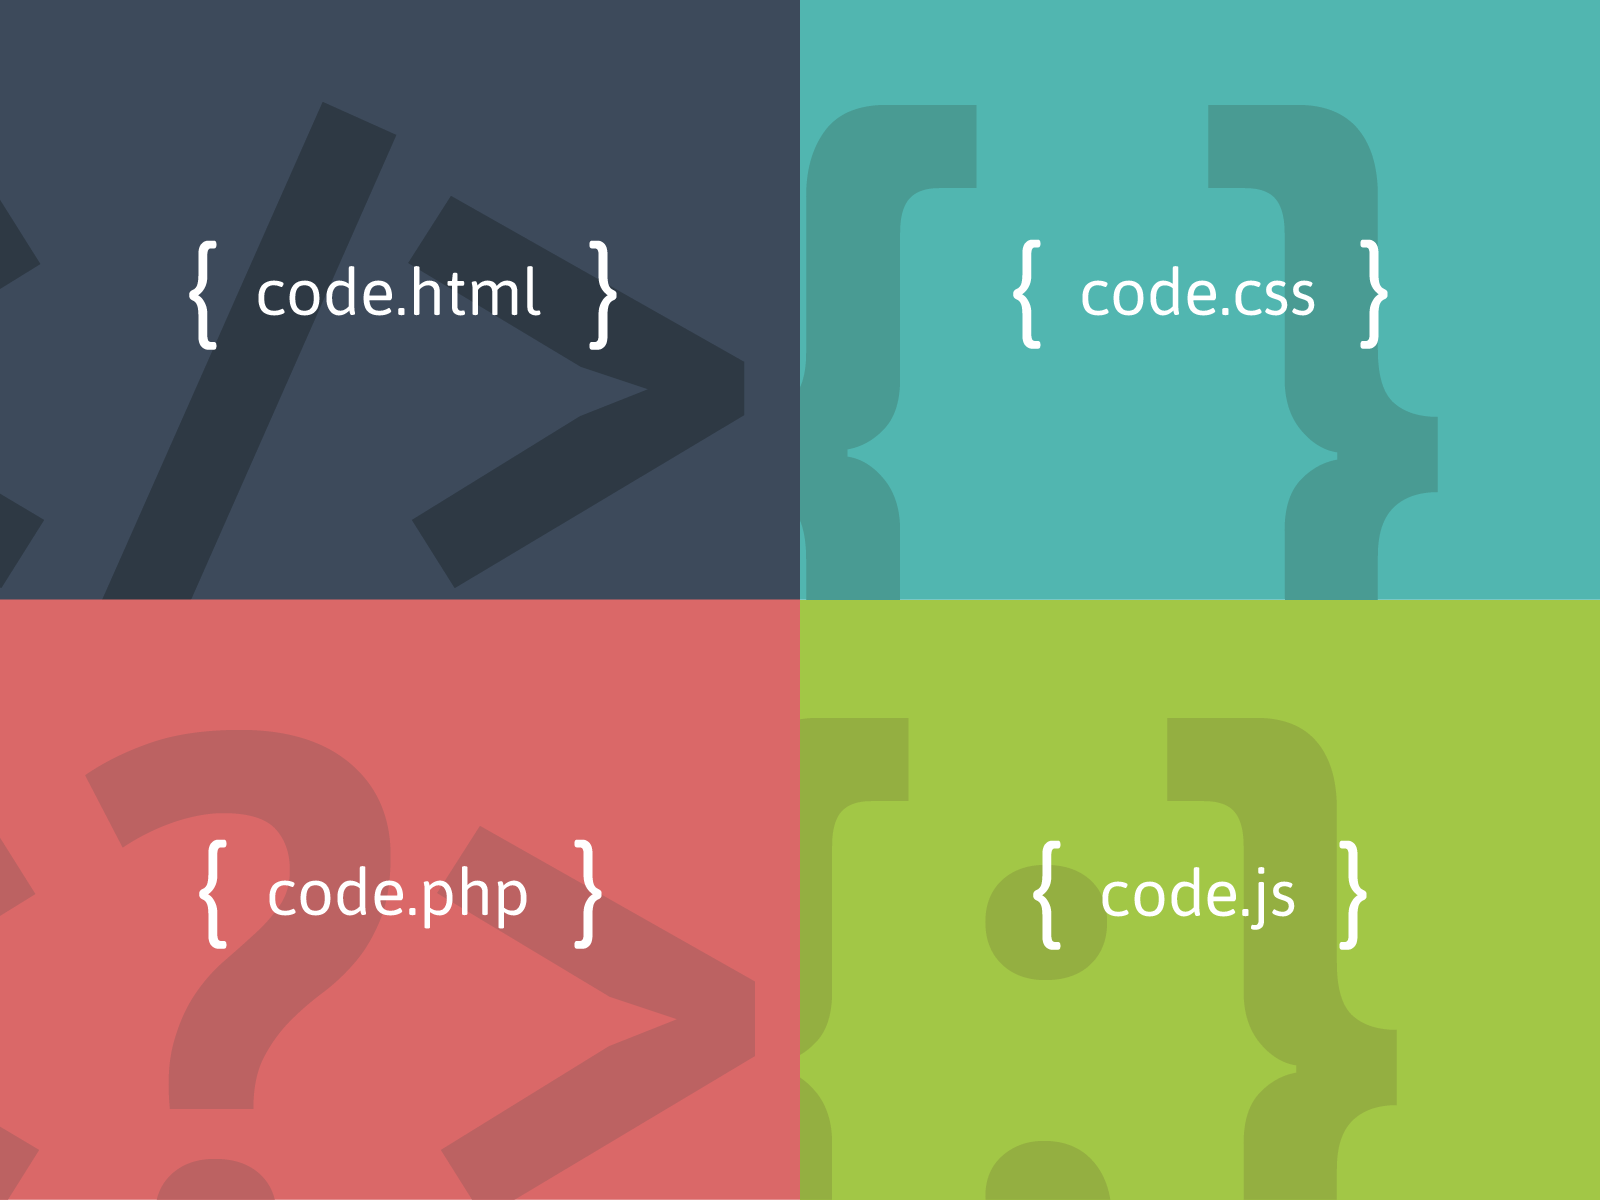 Проекта html css. Html CSS js. Программирование html php CSS js. CSS язык программирования. Картинка html CSS js.